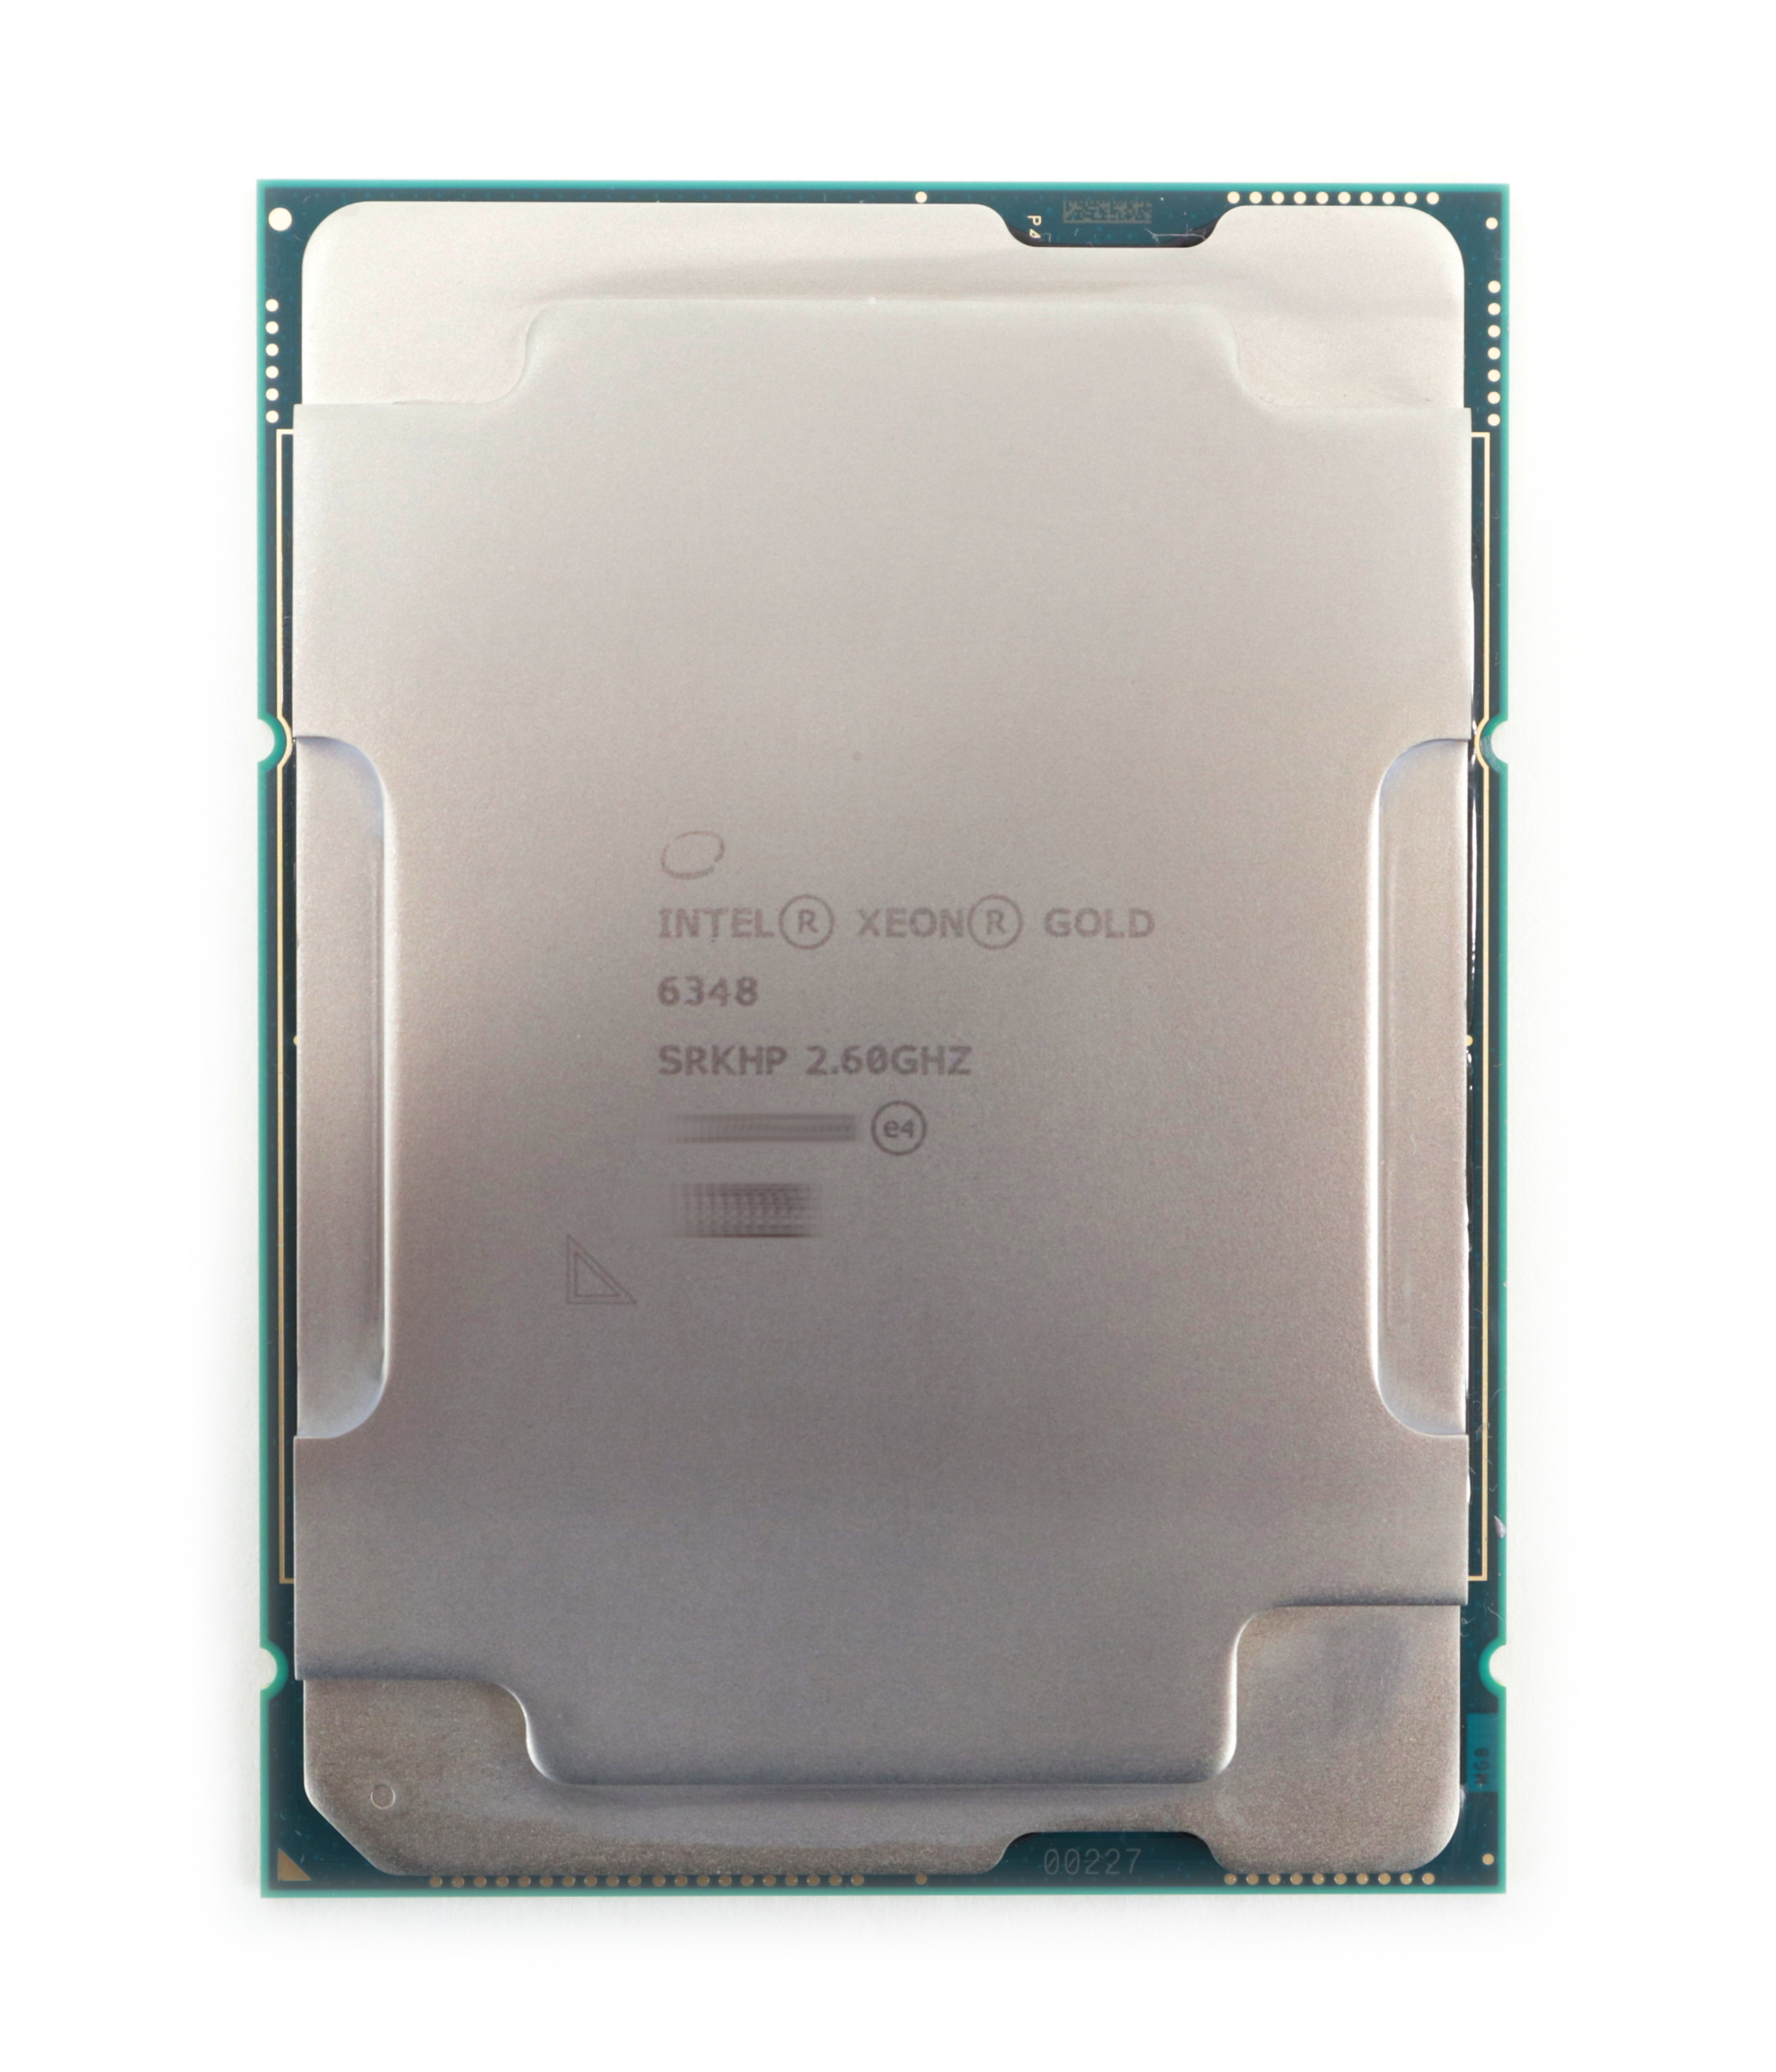 Intel Xeon Gold 6348 2.6GHz 42M Cache 28C 56T Sockets FCLGA4189 SRKHP P36937-B21 - Click Image to Close